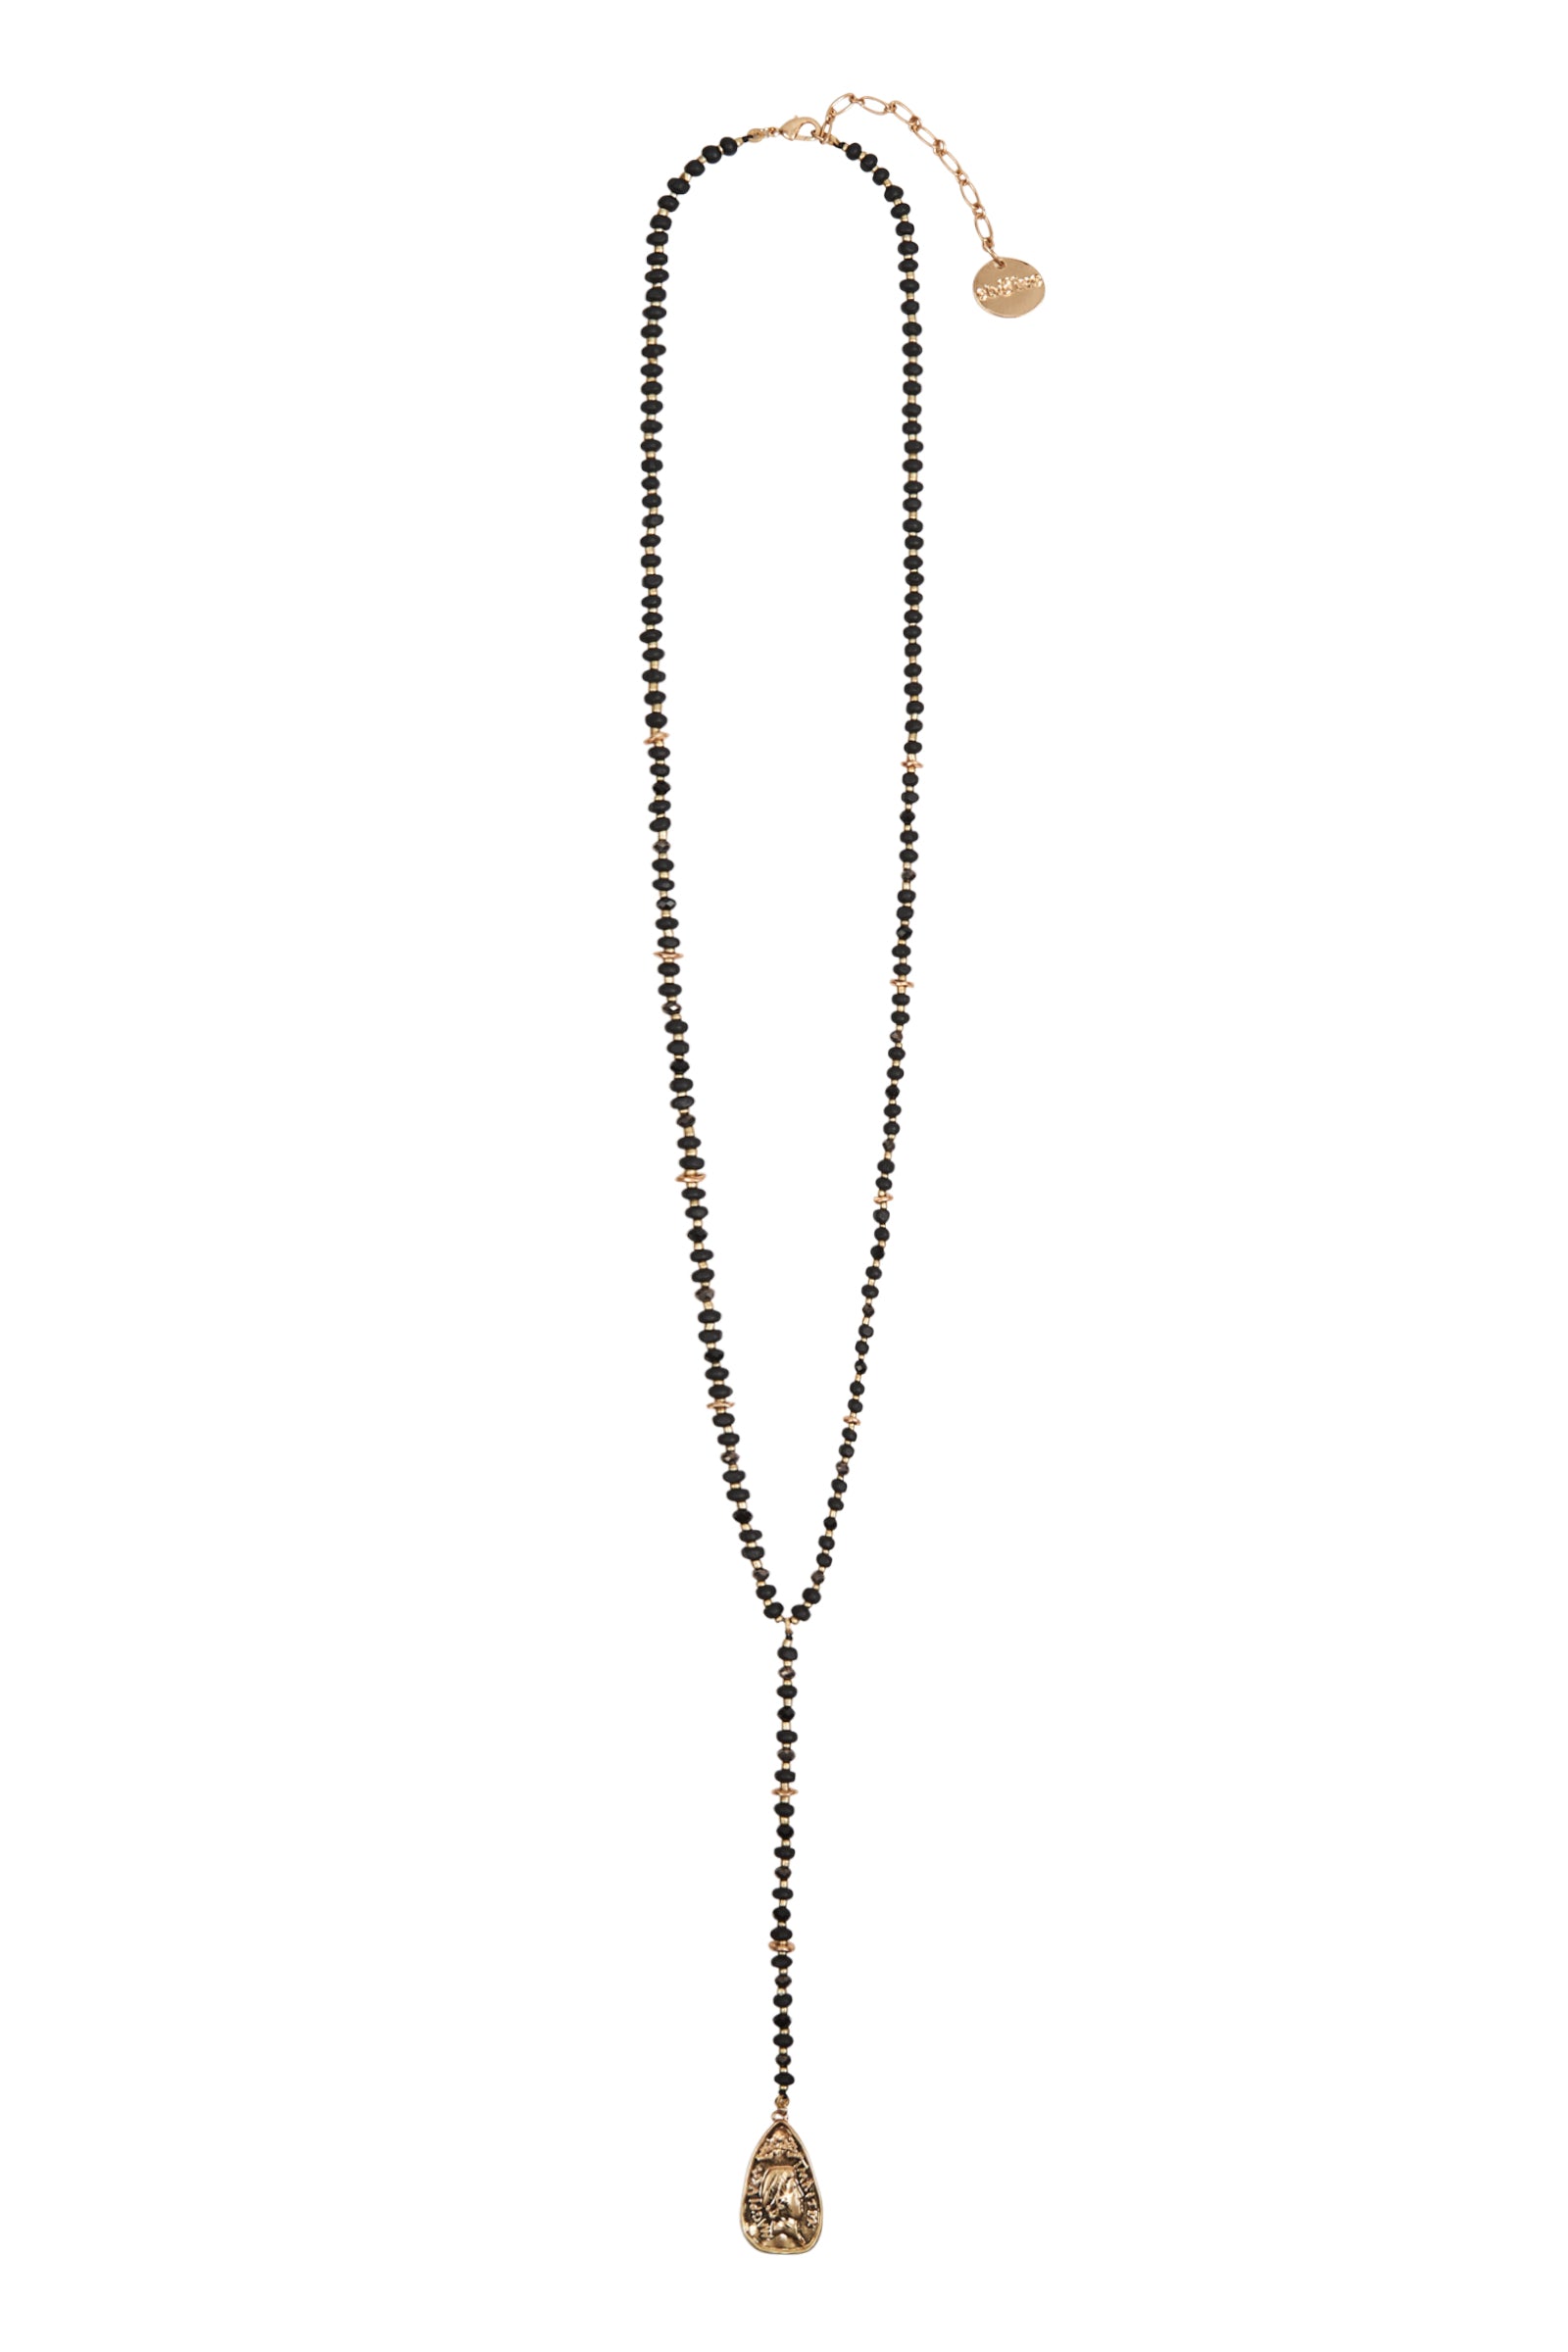 Irula Necklace - Gold Drop - eb&ive Necklace